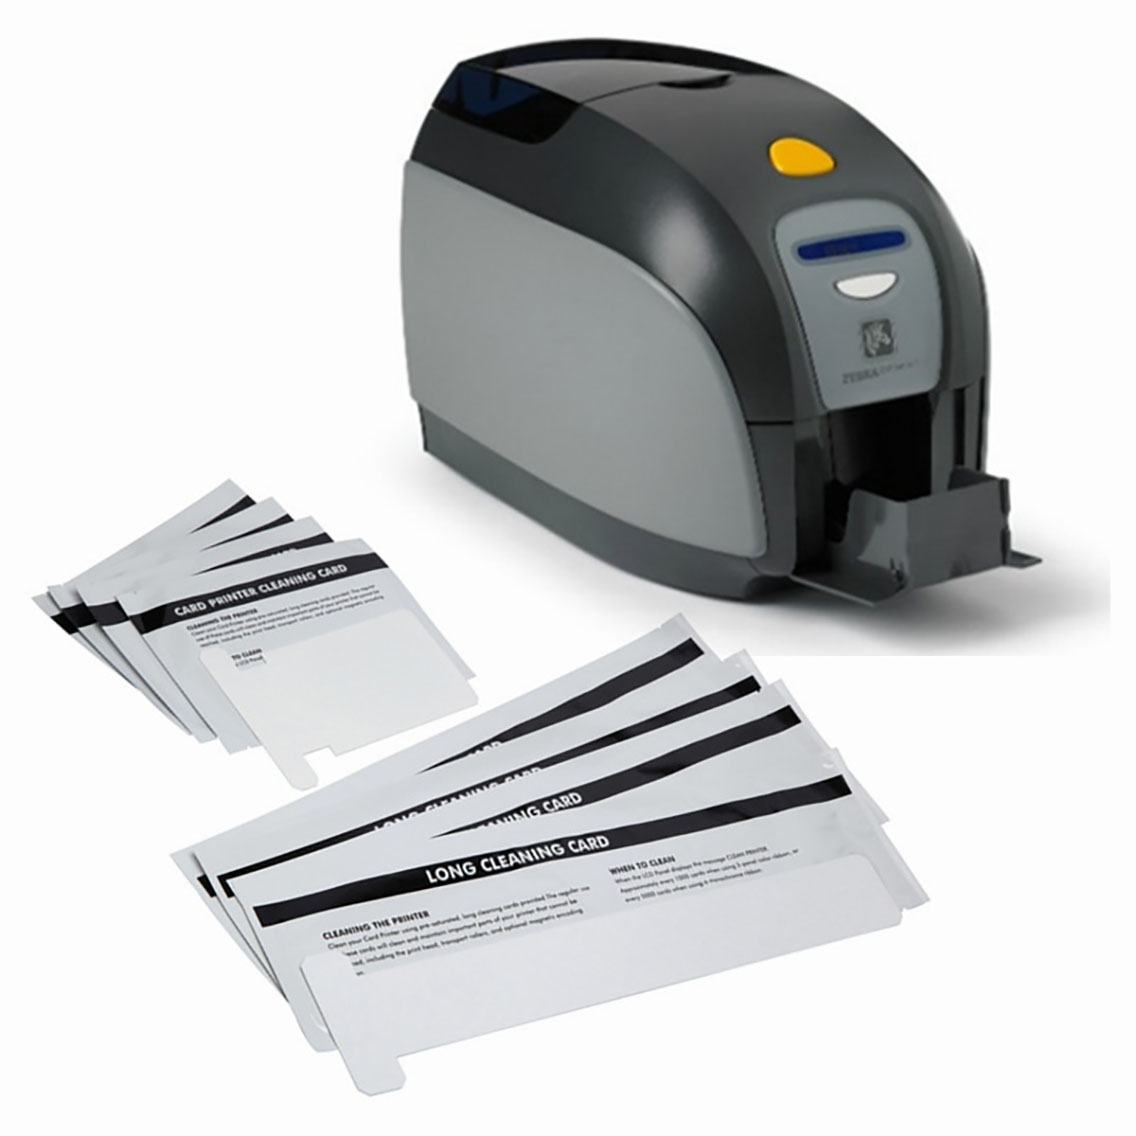 Cleanmo pvc zebra cleaning kit manufacturer for Zebra P120i printer-4